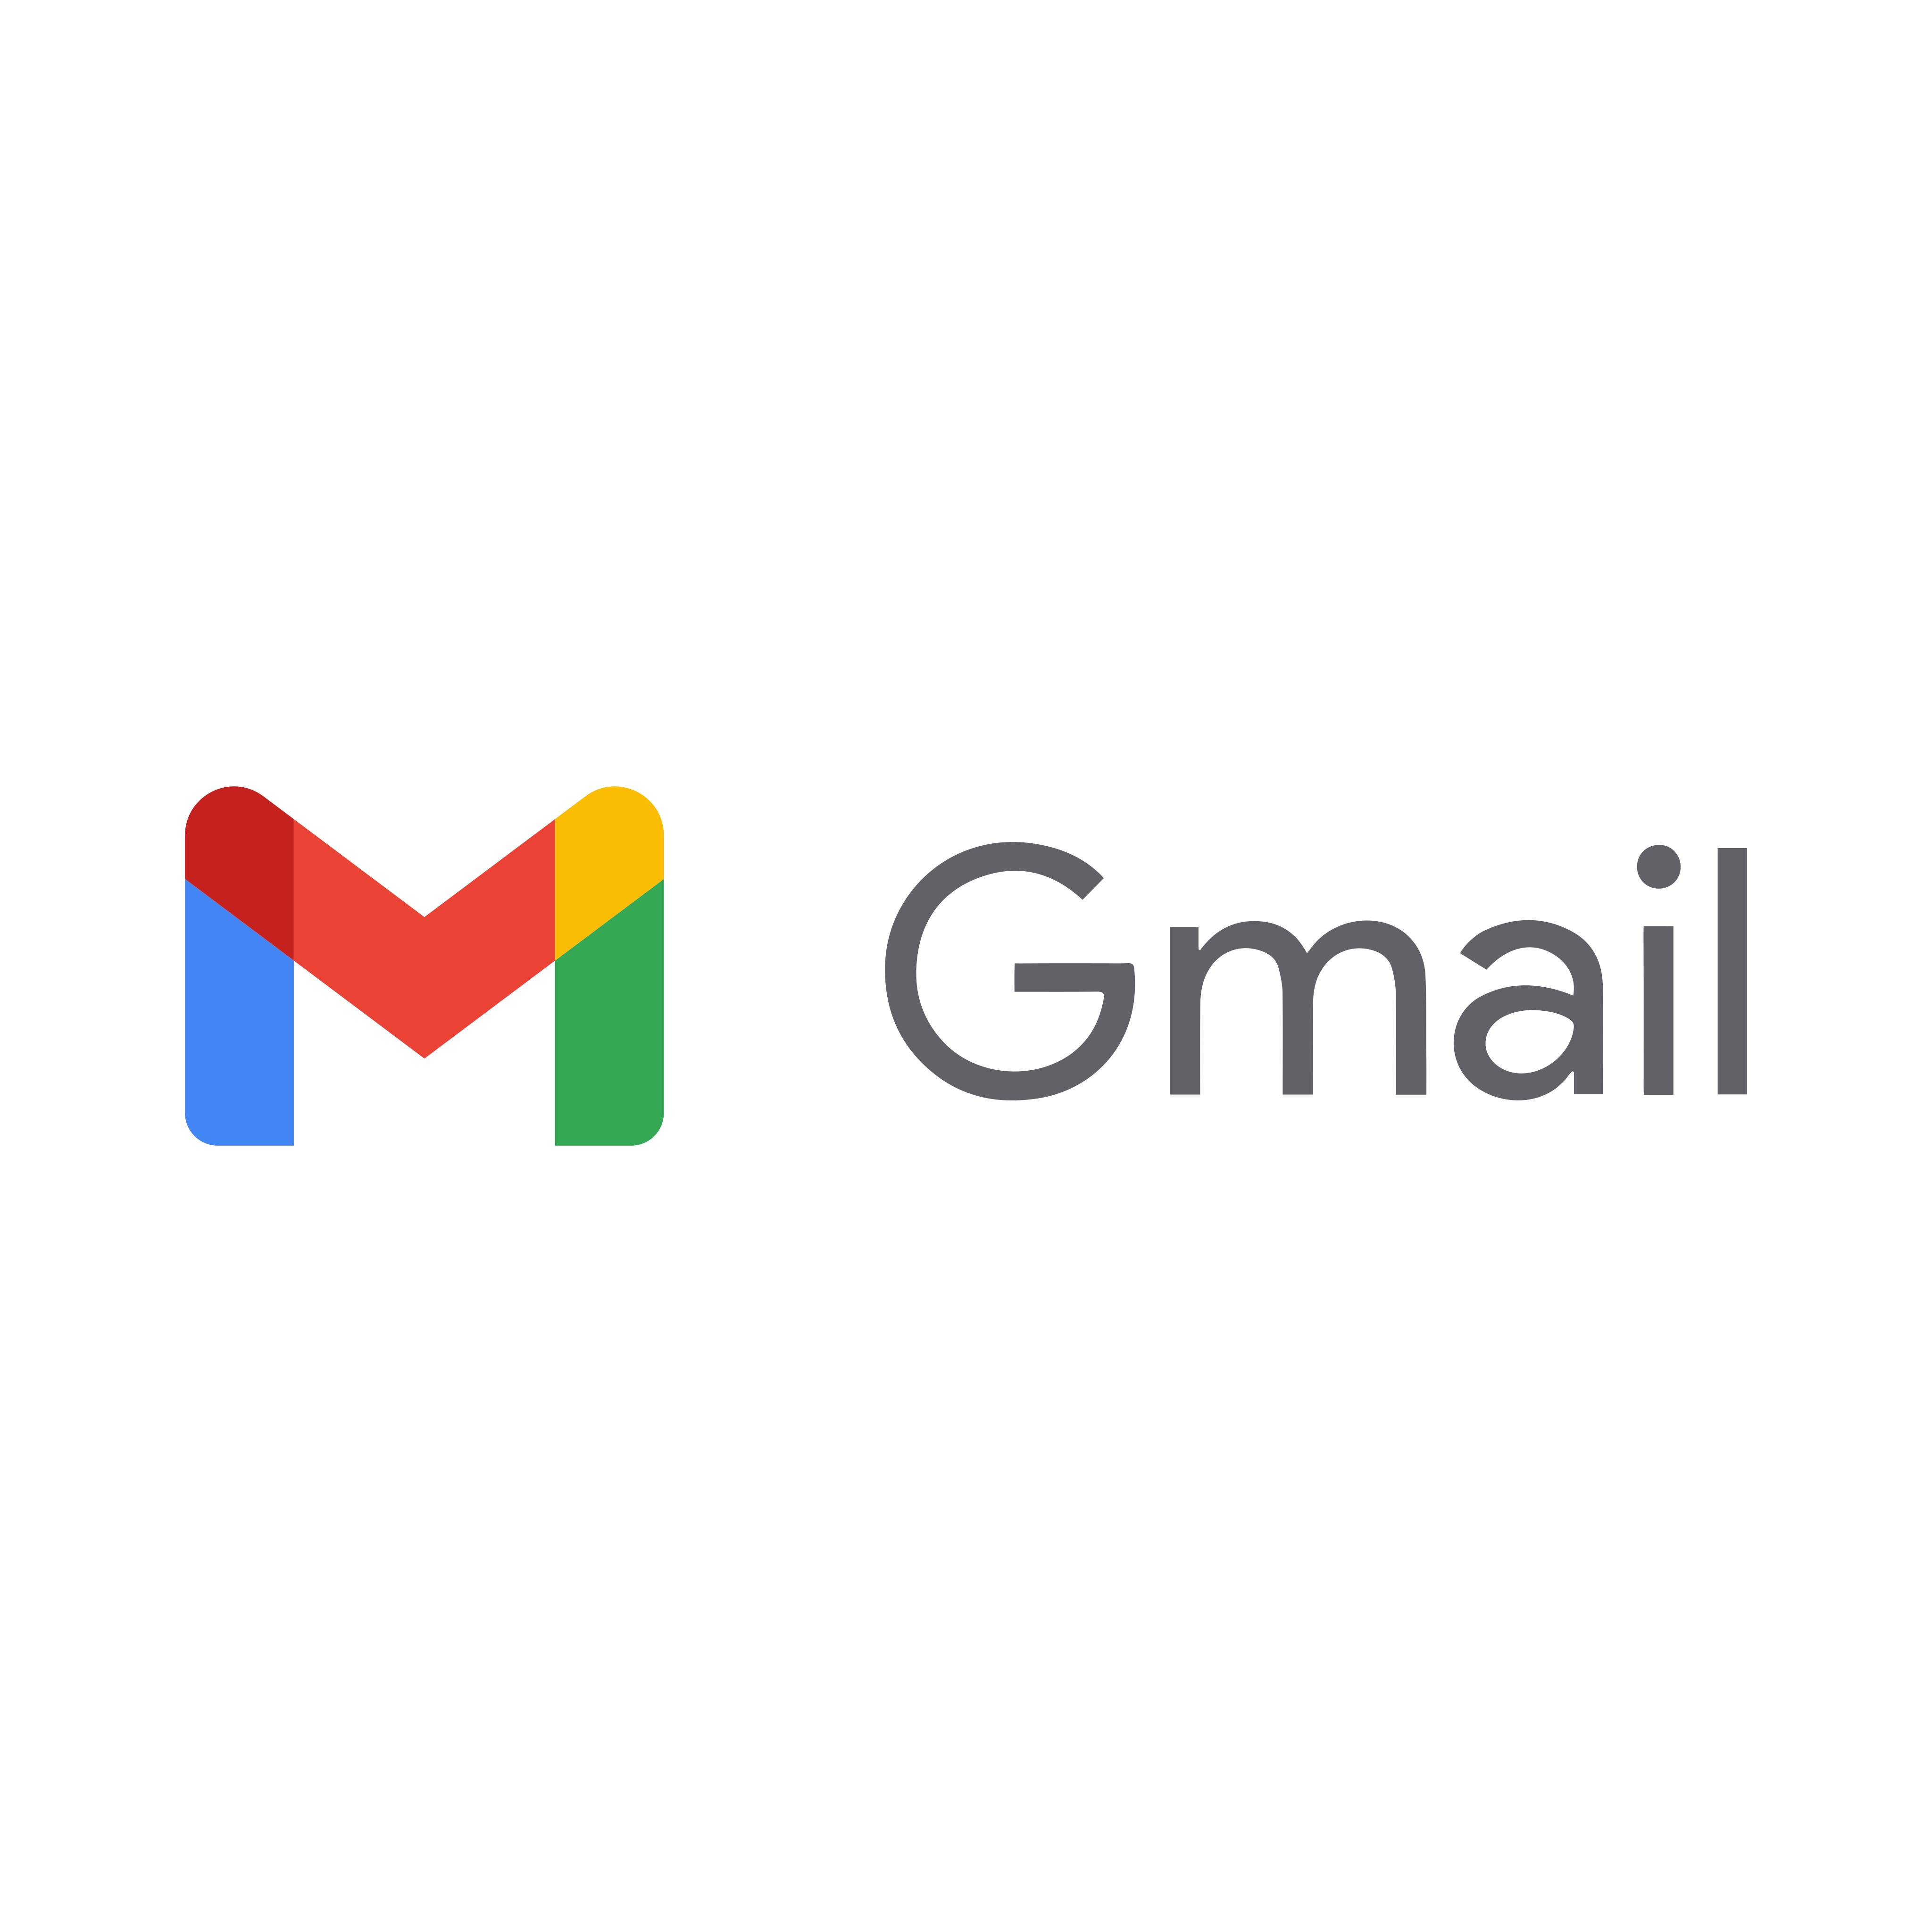 gmail logo 0 - Gmail Logo